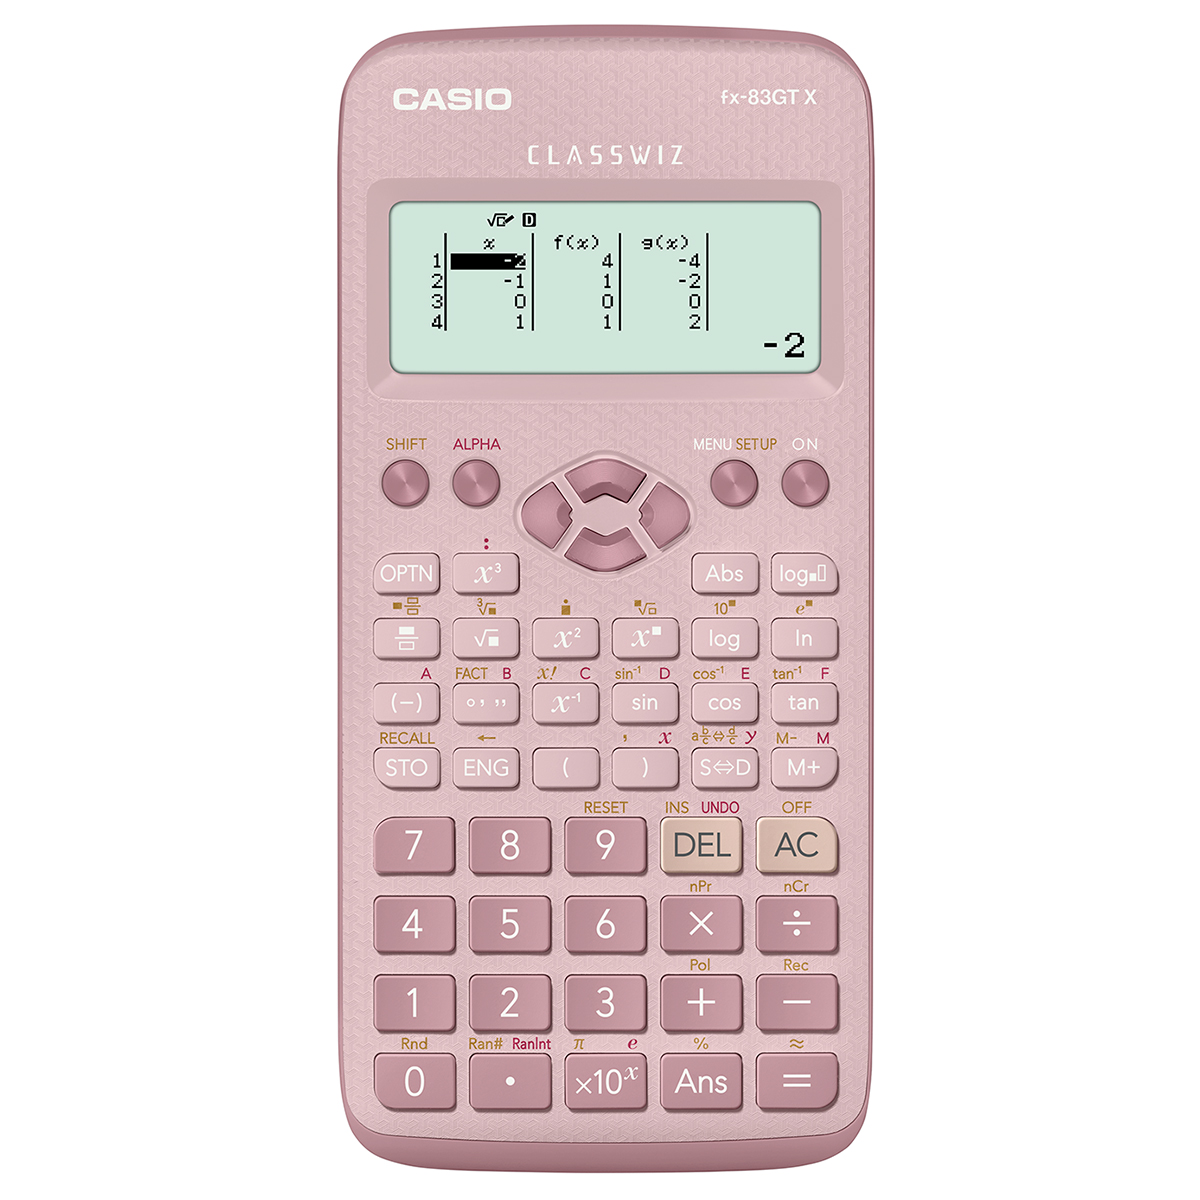 casio financial calculator fc 100v manual